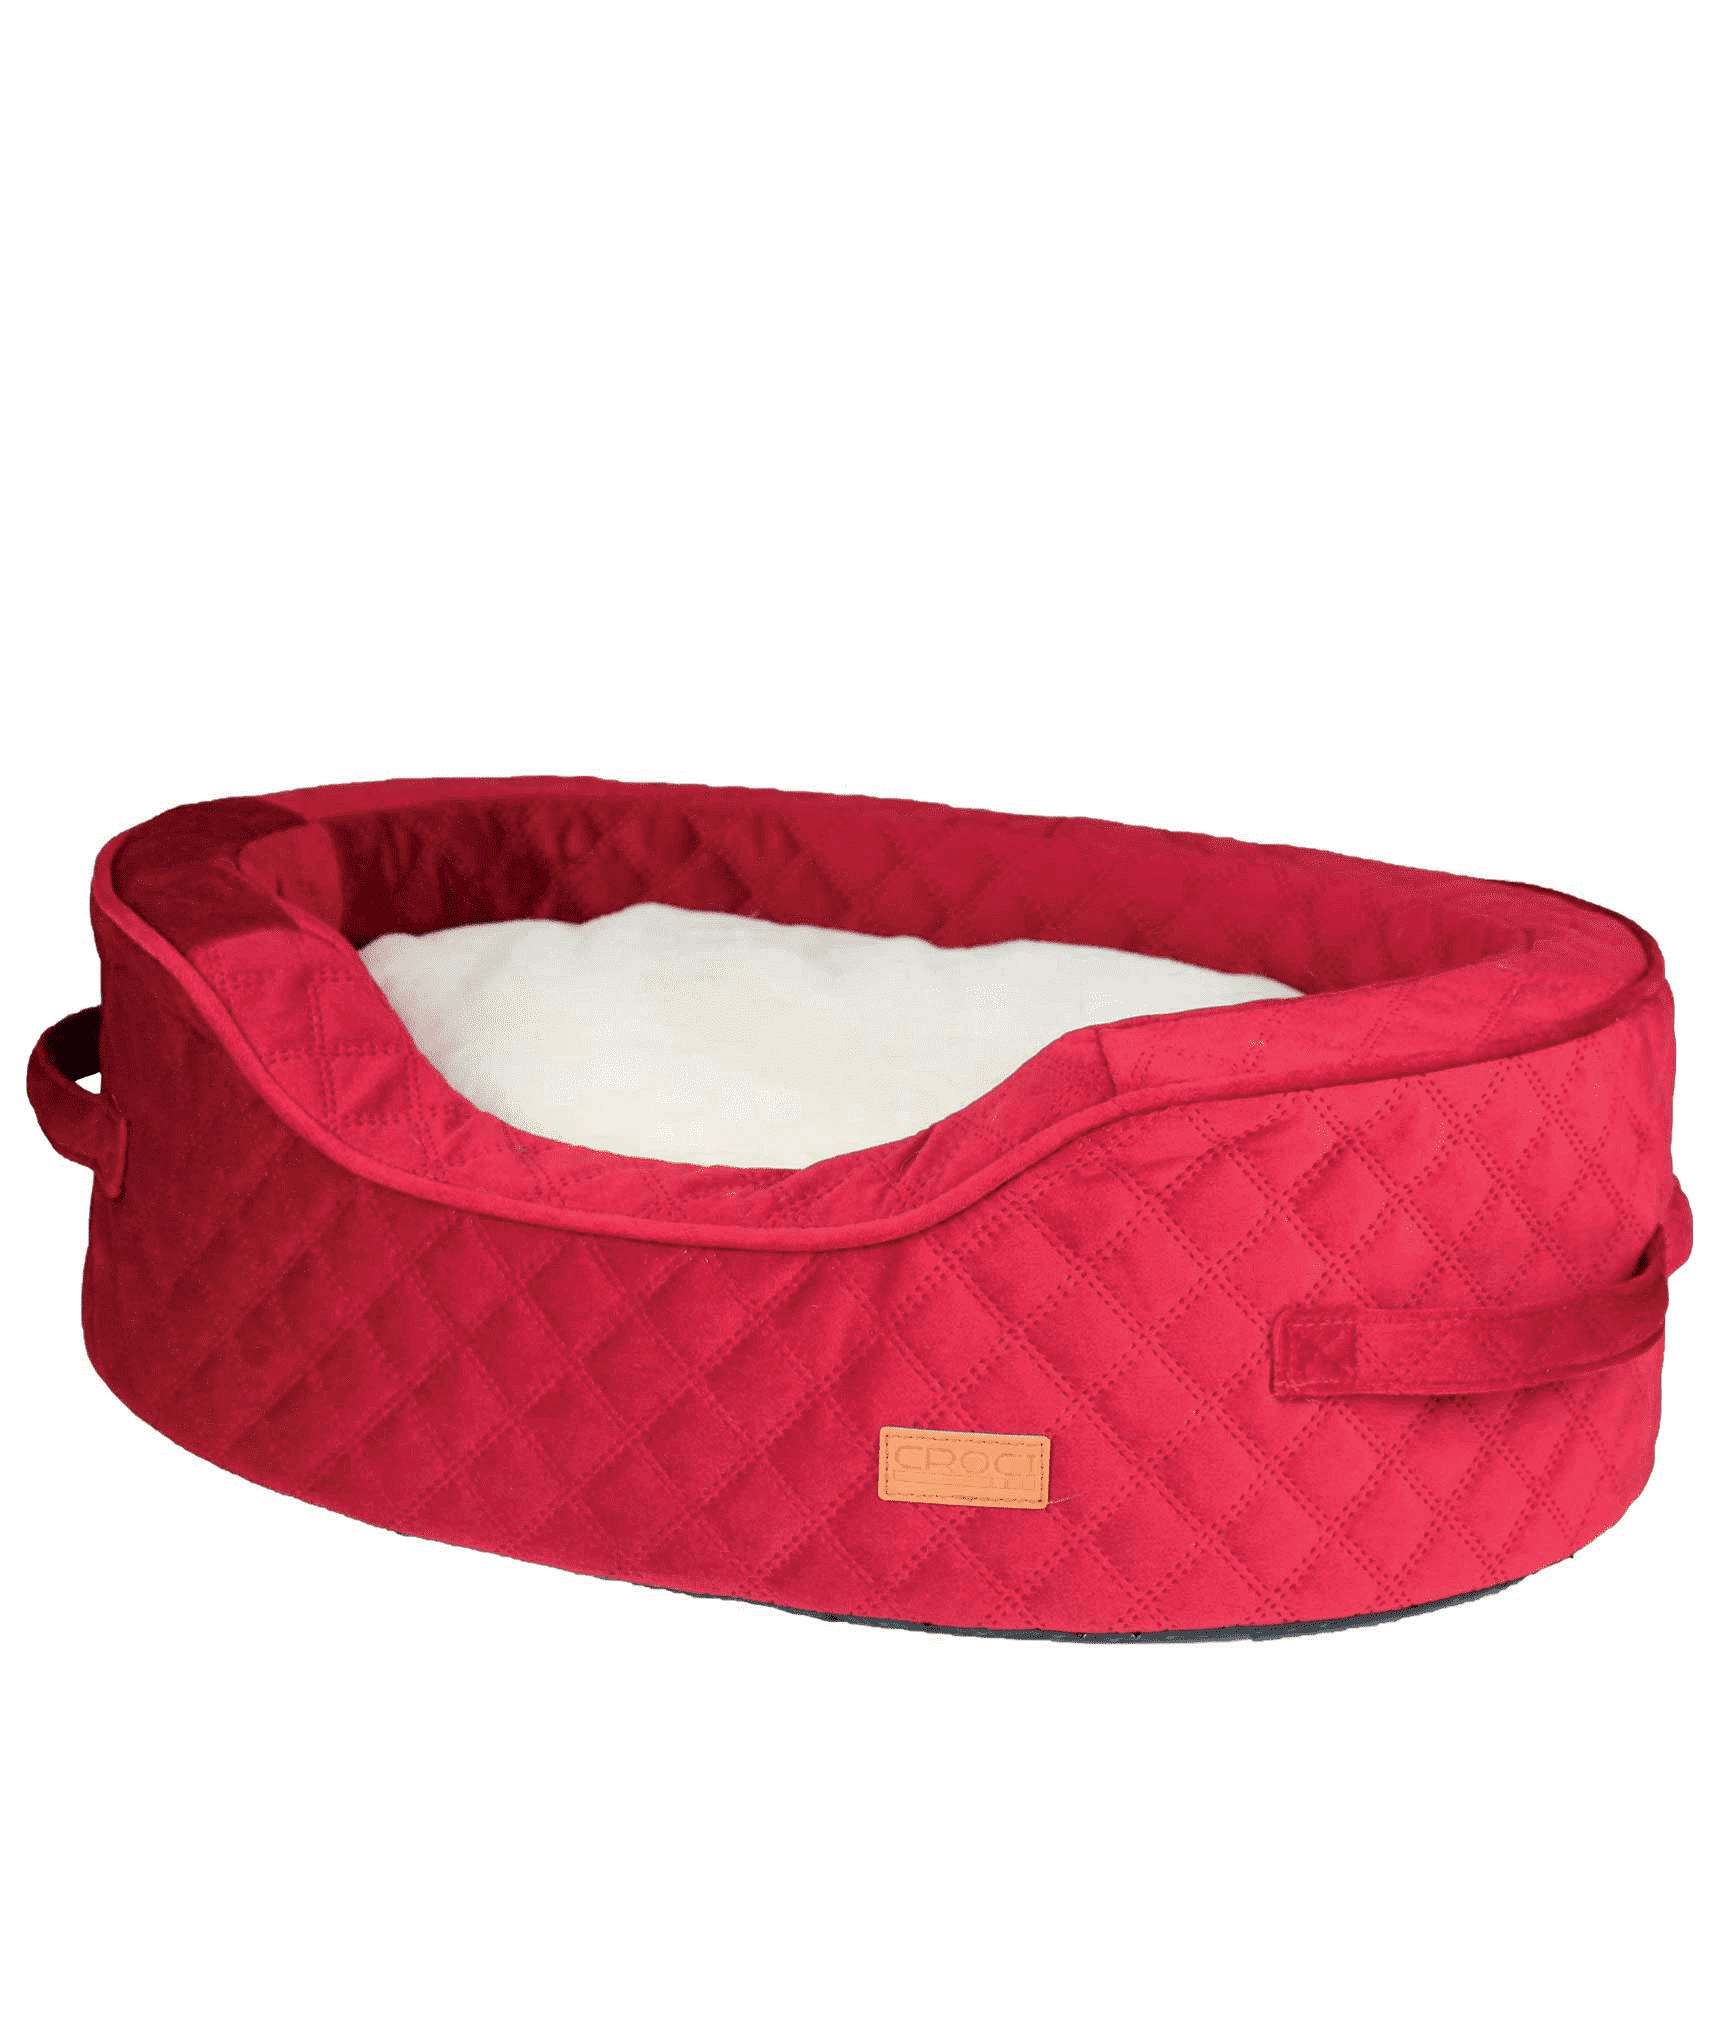 Cuccia Ovale Rossa Croci 58X43X20cm